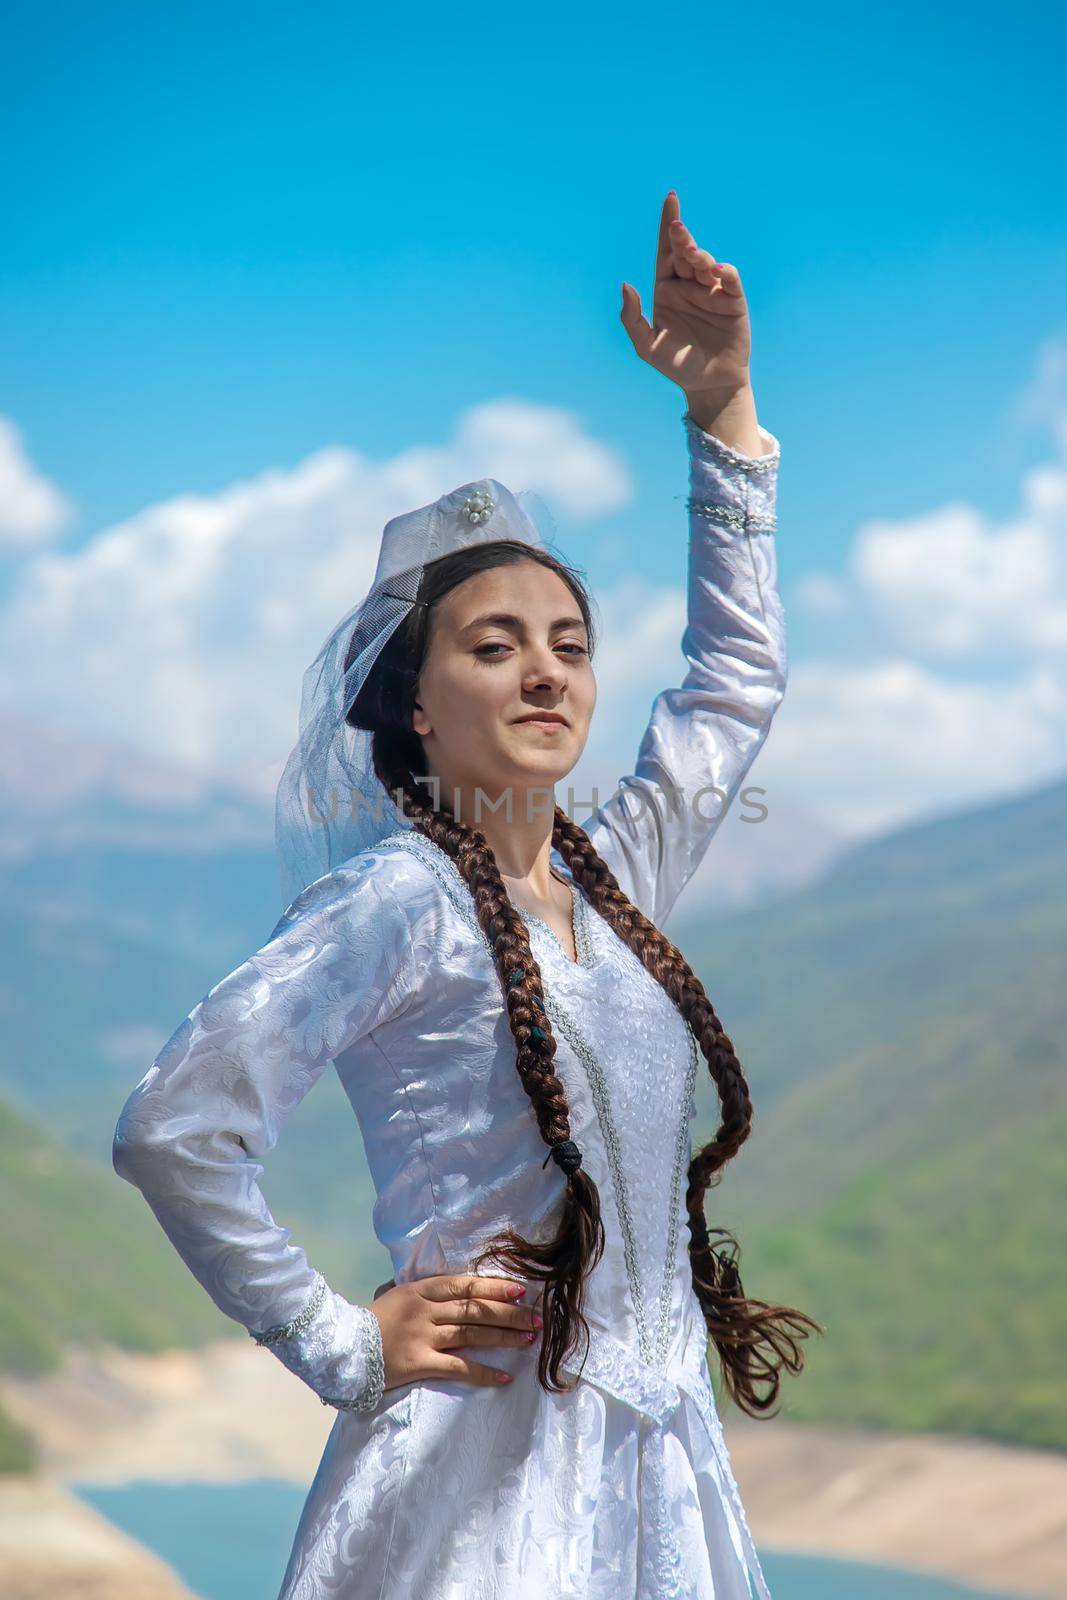 Georgian woman in national dress. Selective focus. People.